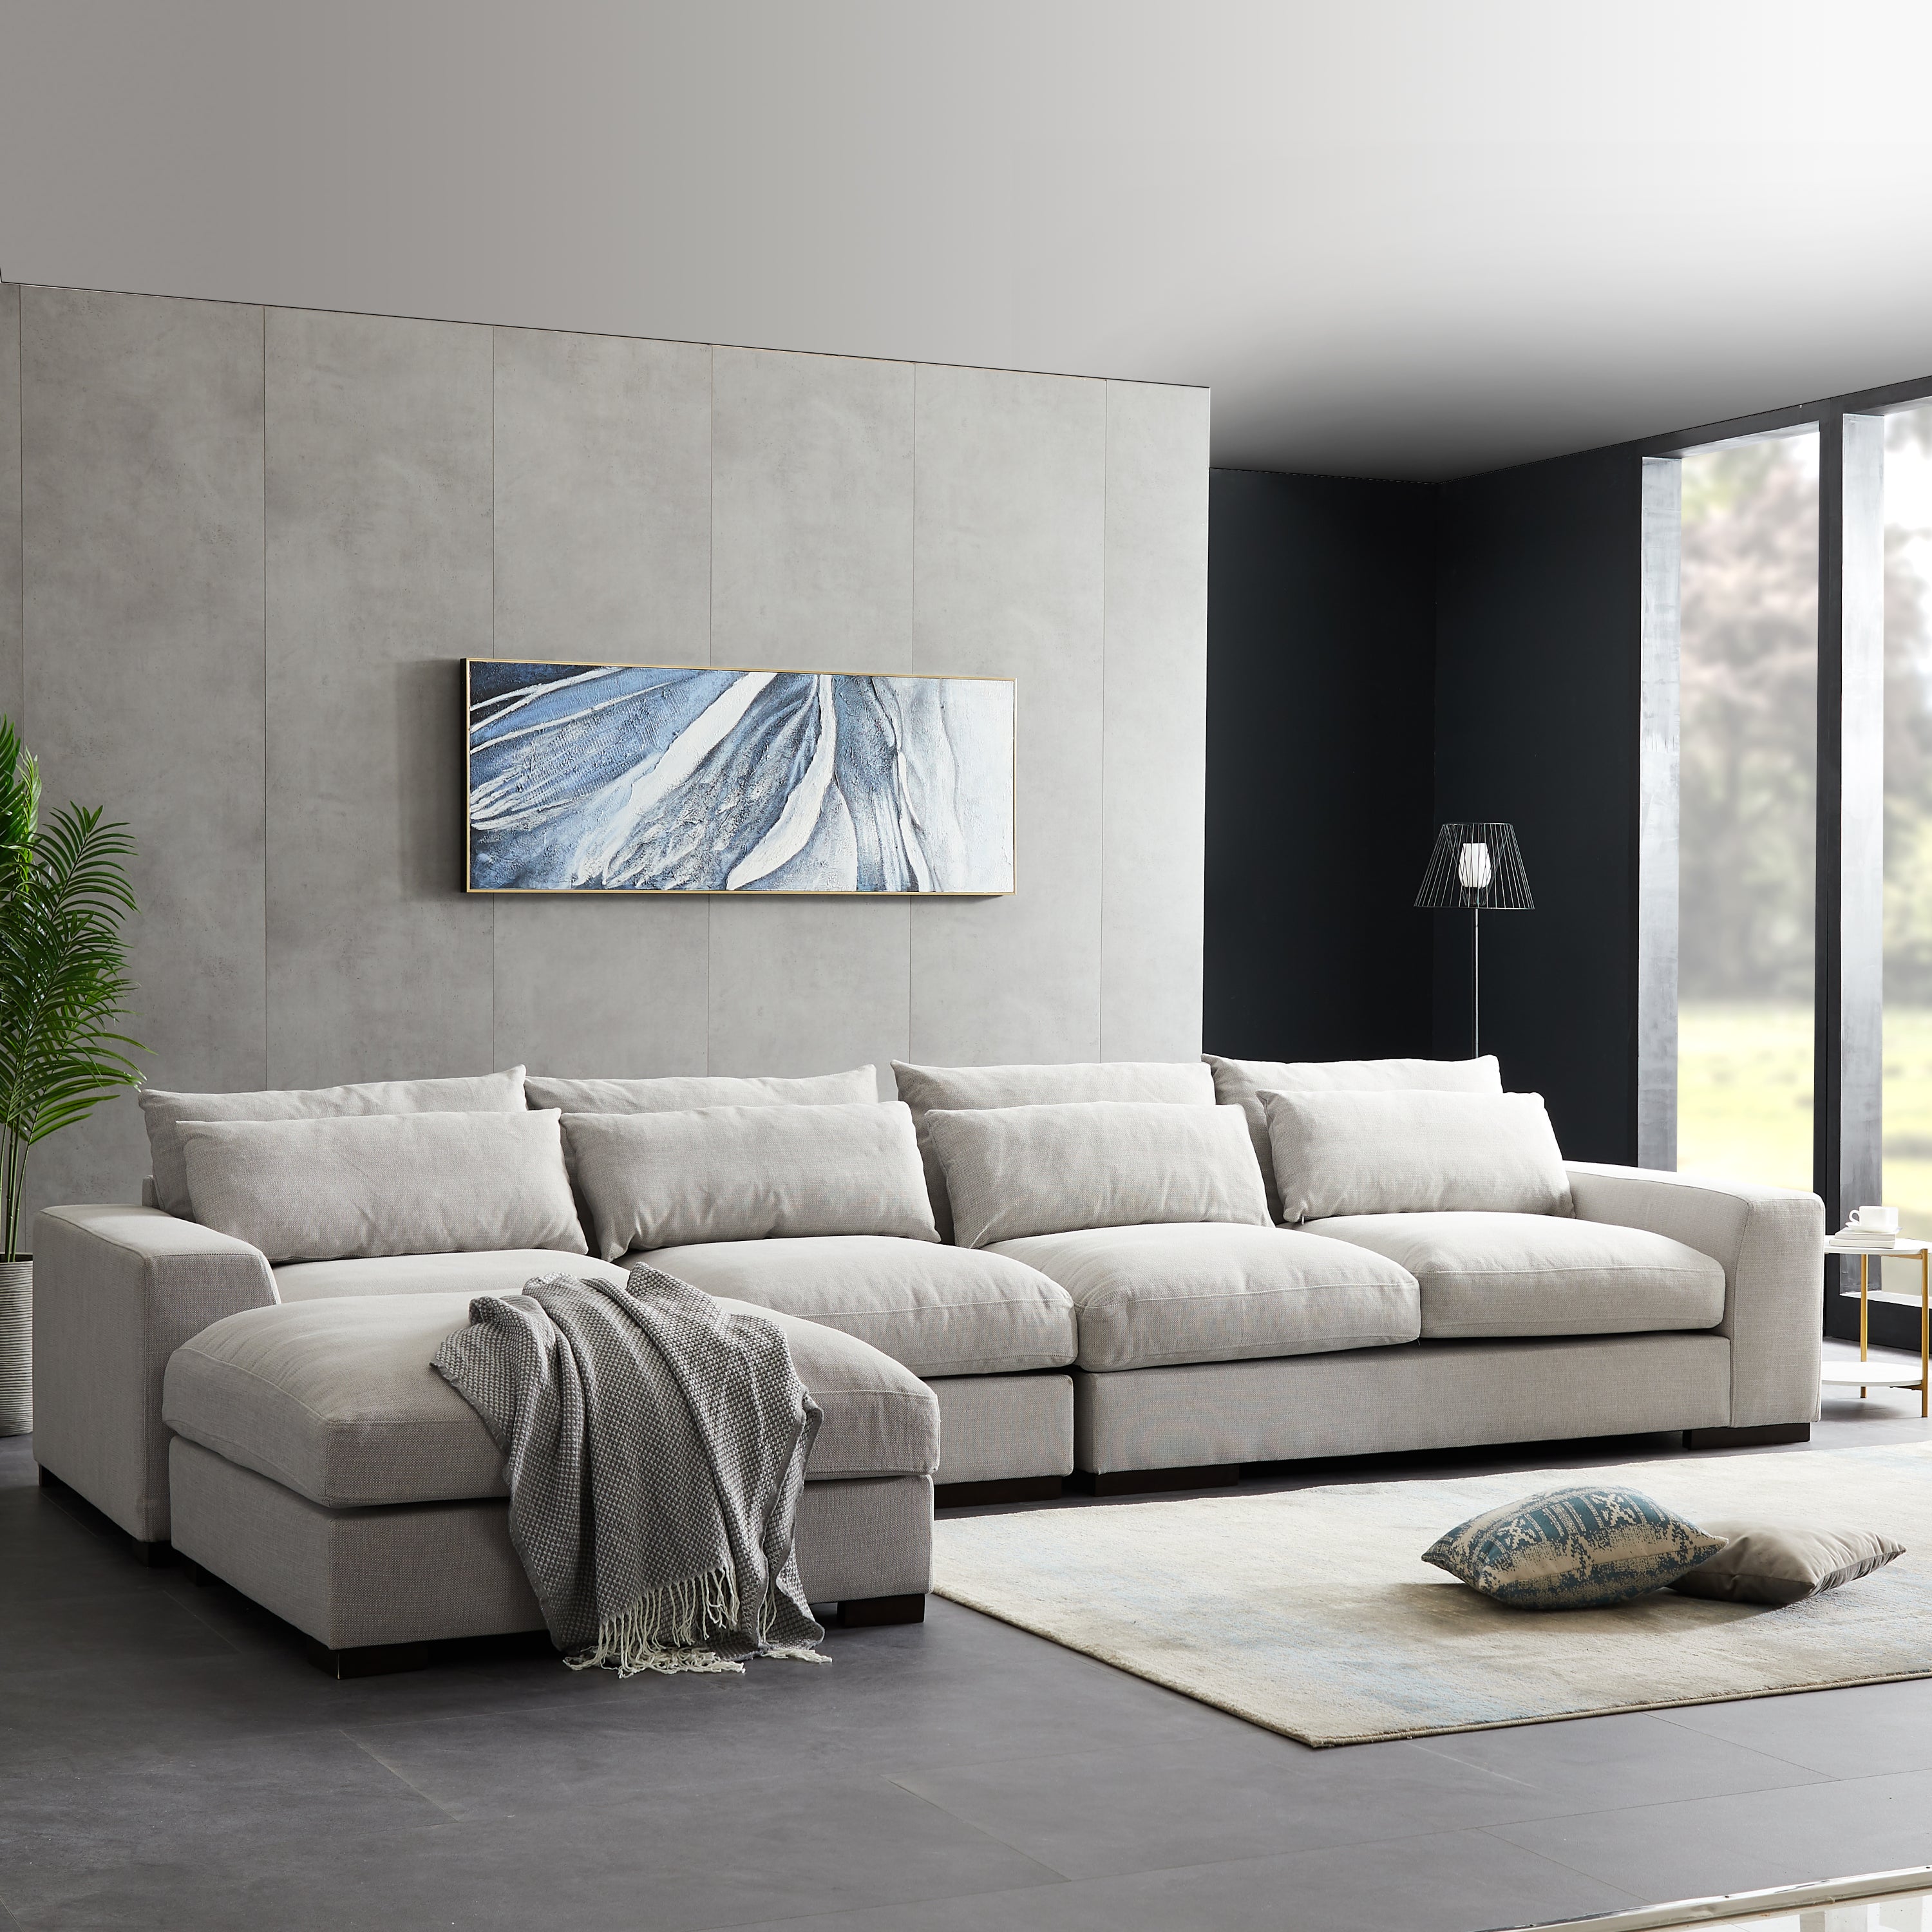 Sofas and Sectional Sofas Light Gray